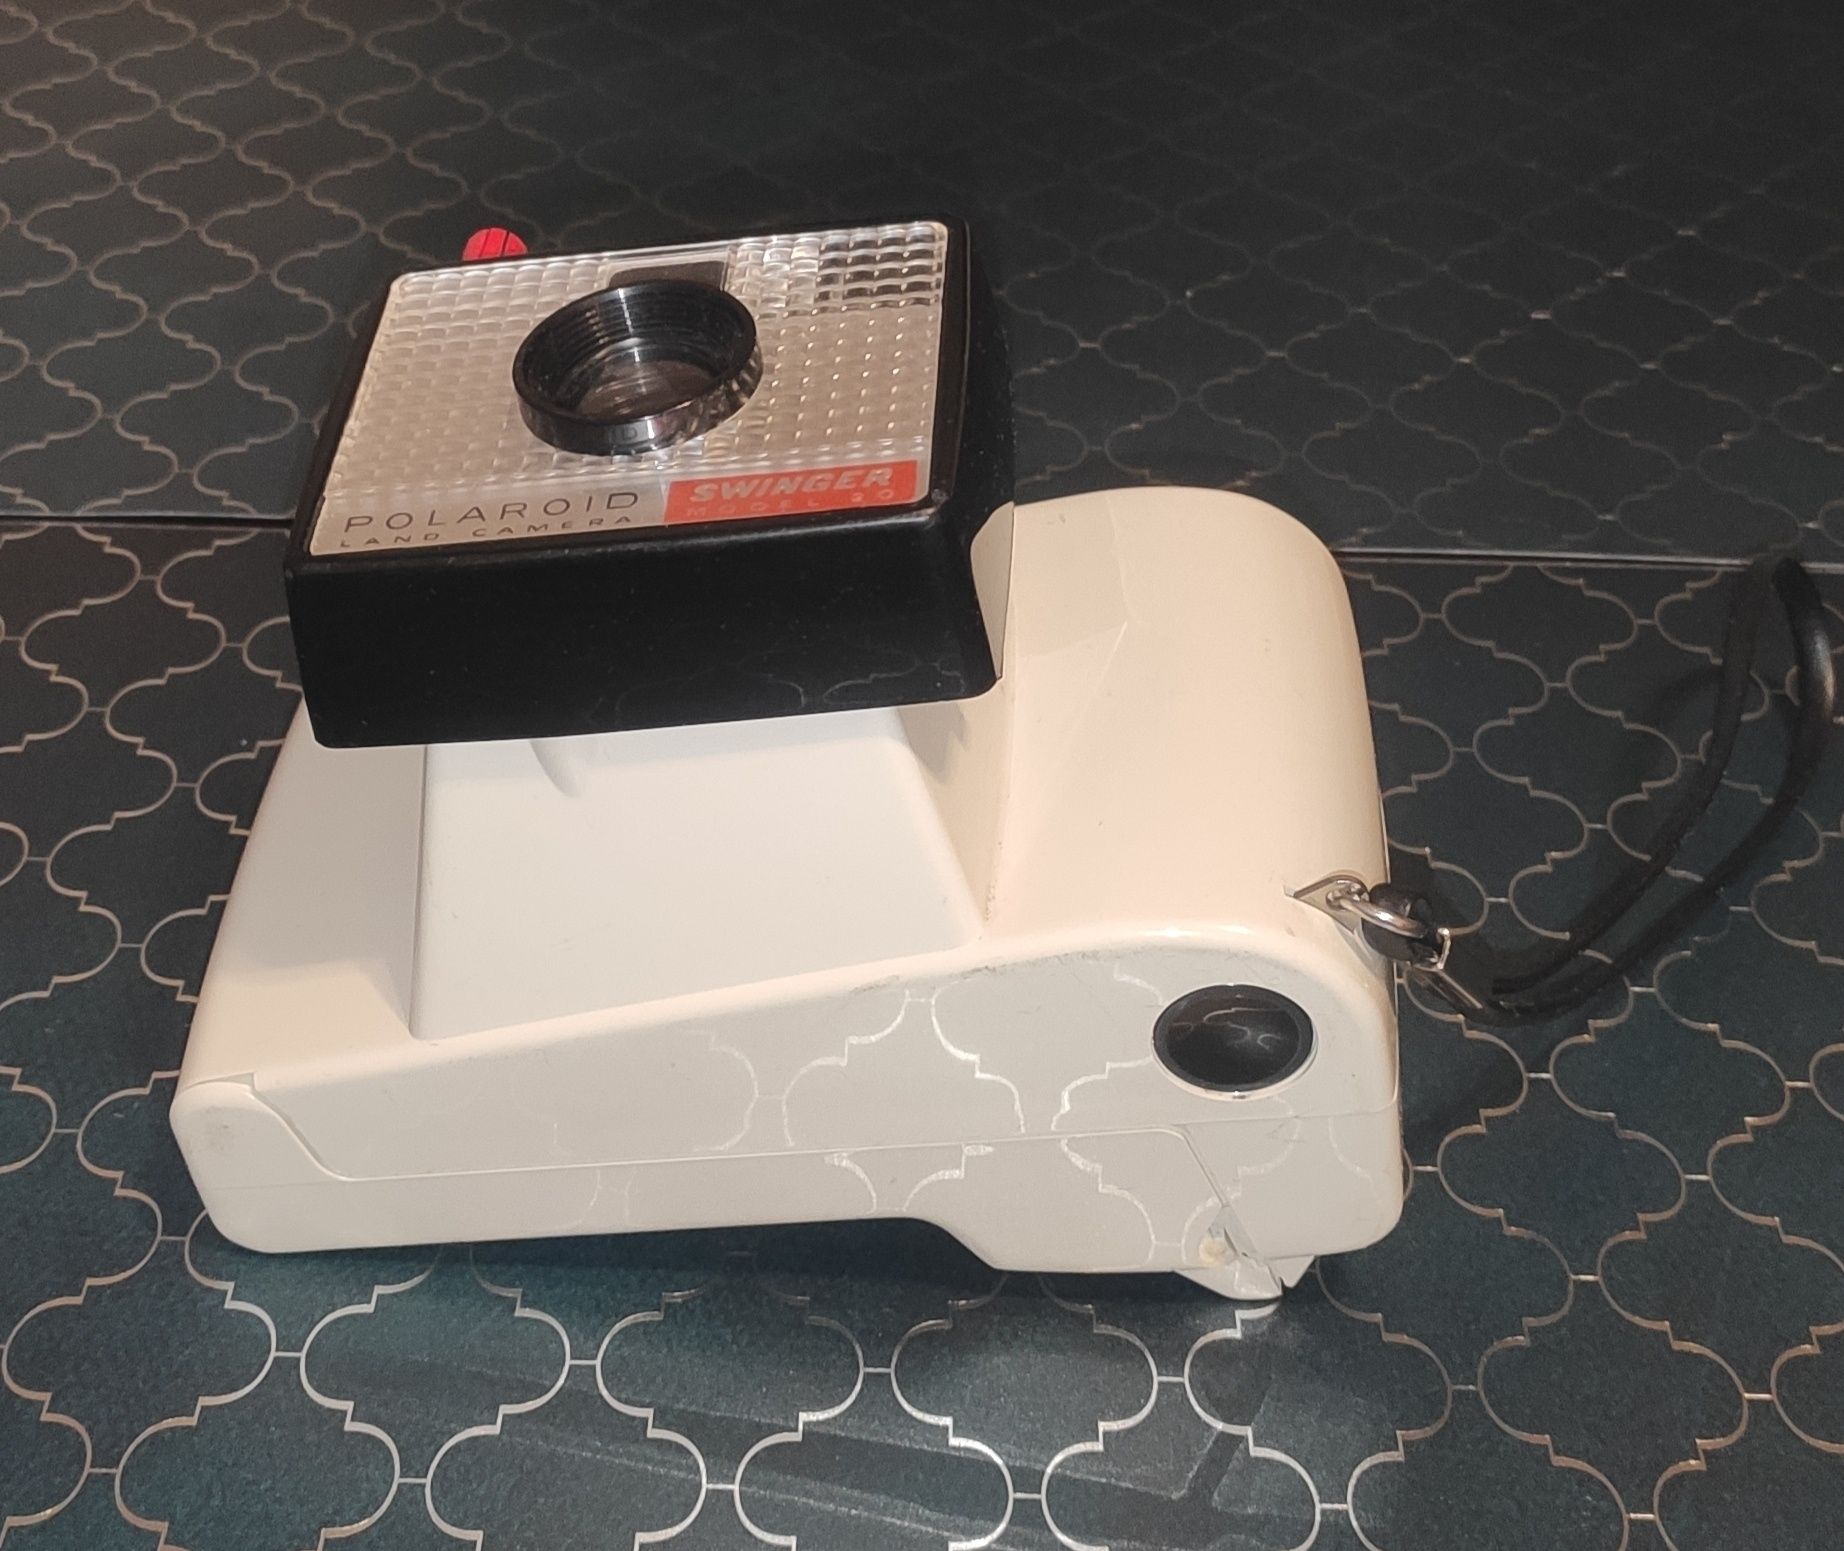 Aparat Polaroid Swinger Model 20